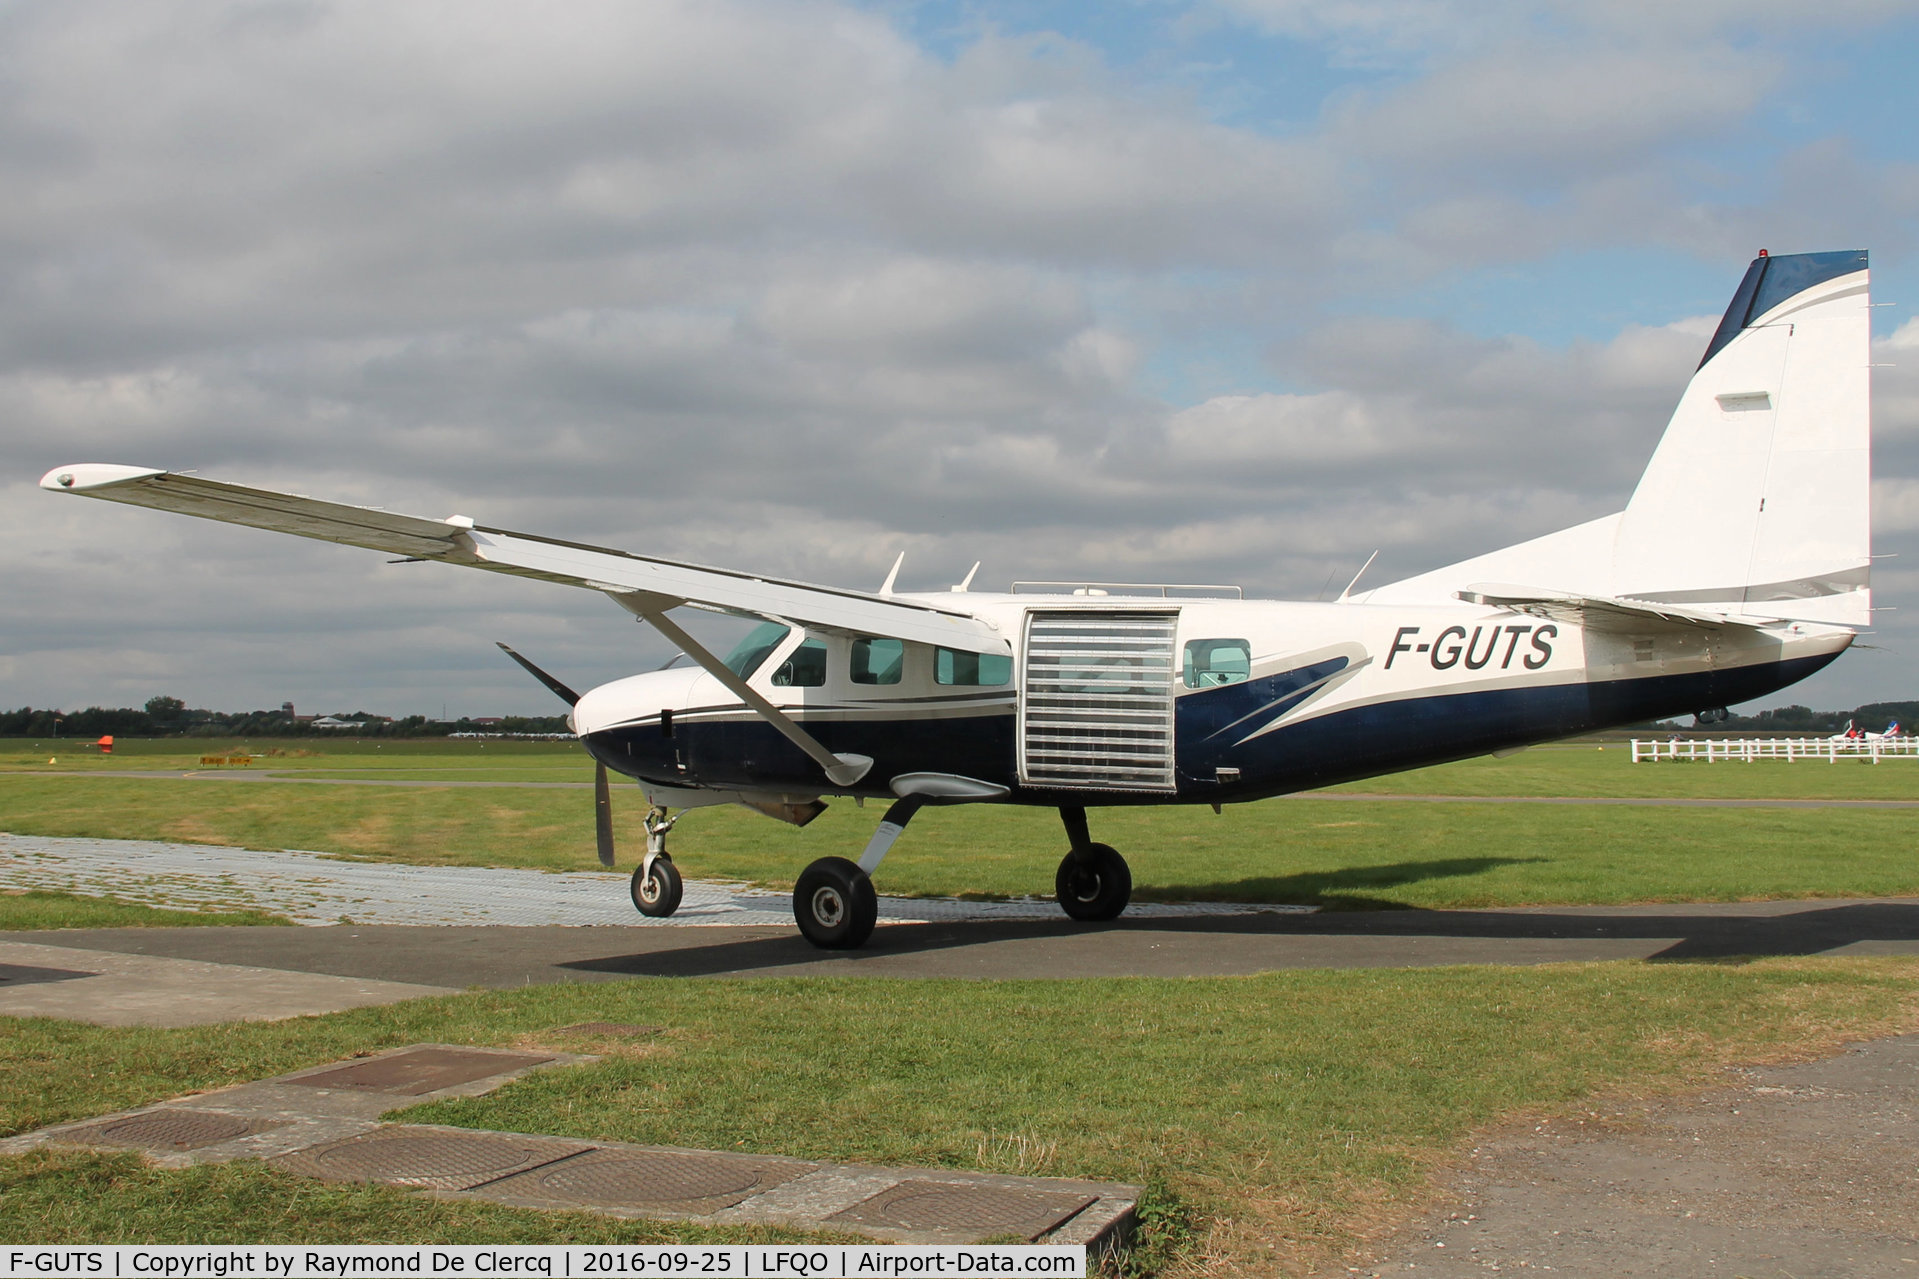 F-GUTS, 1993 Cessna 208 Caravan I C/N 20800225, For skydiving at Lille -Marcq.